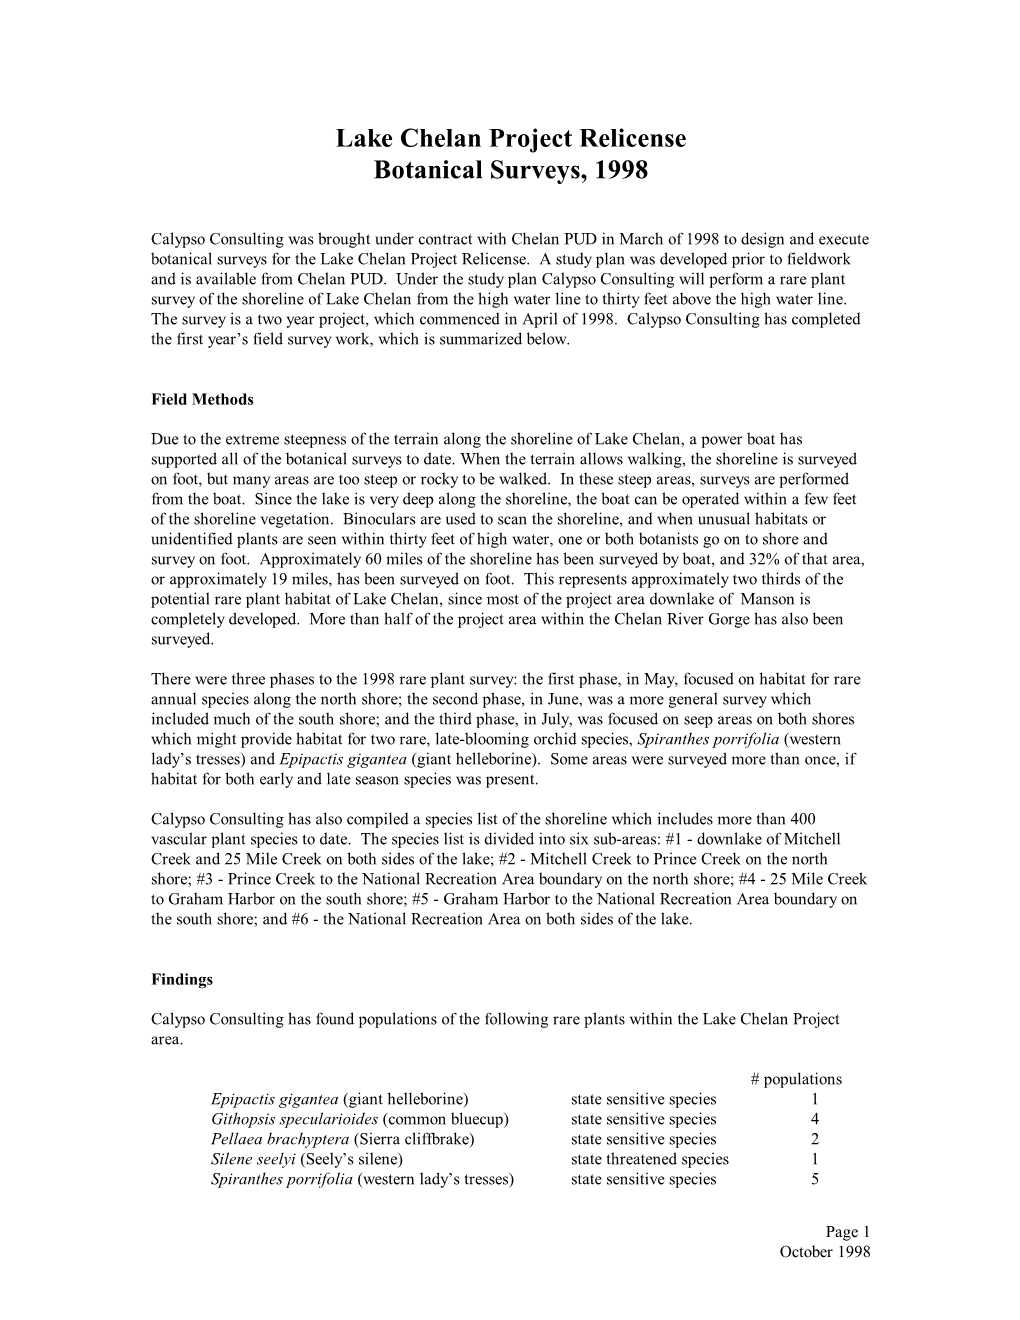 Lake Chelan Project Relicense Botanical Surveys, 1998